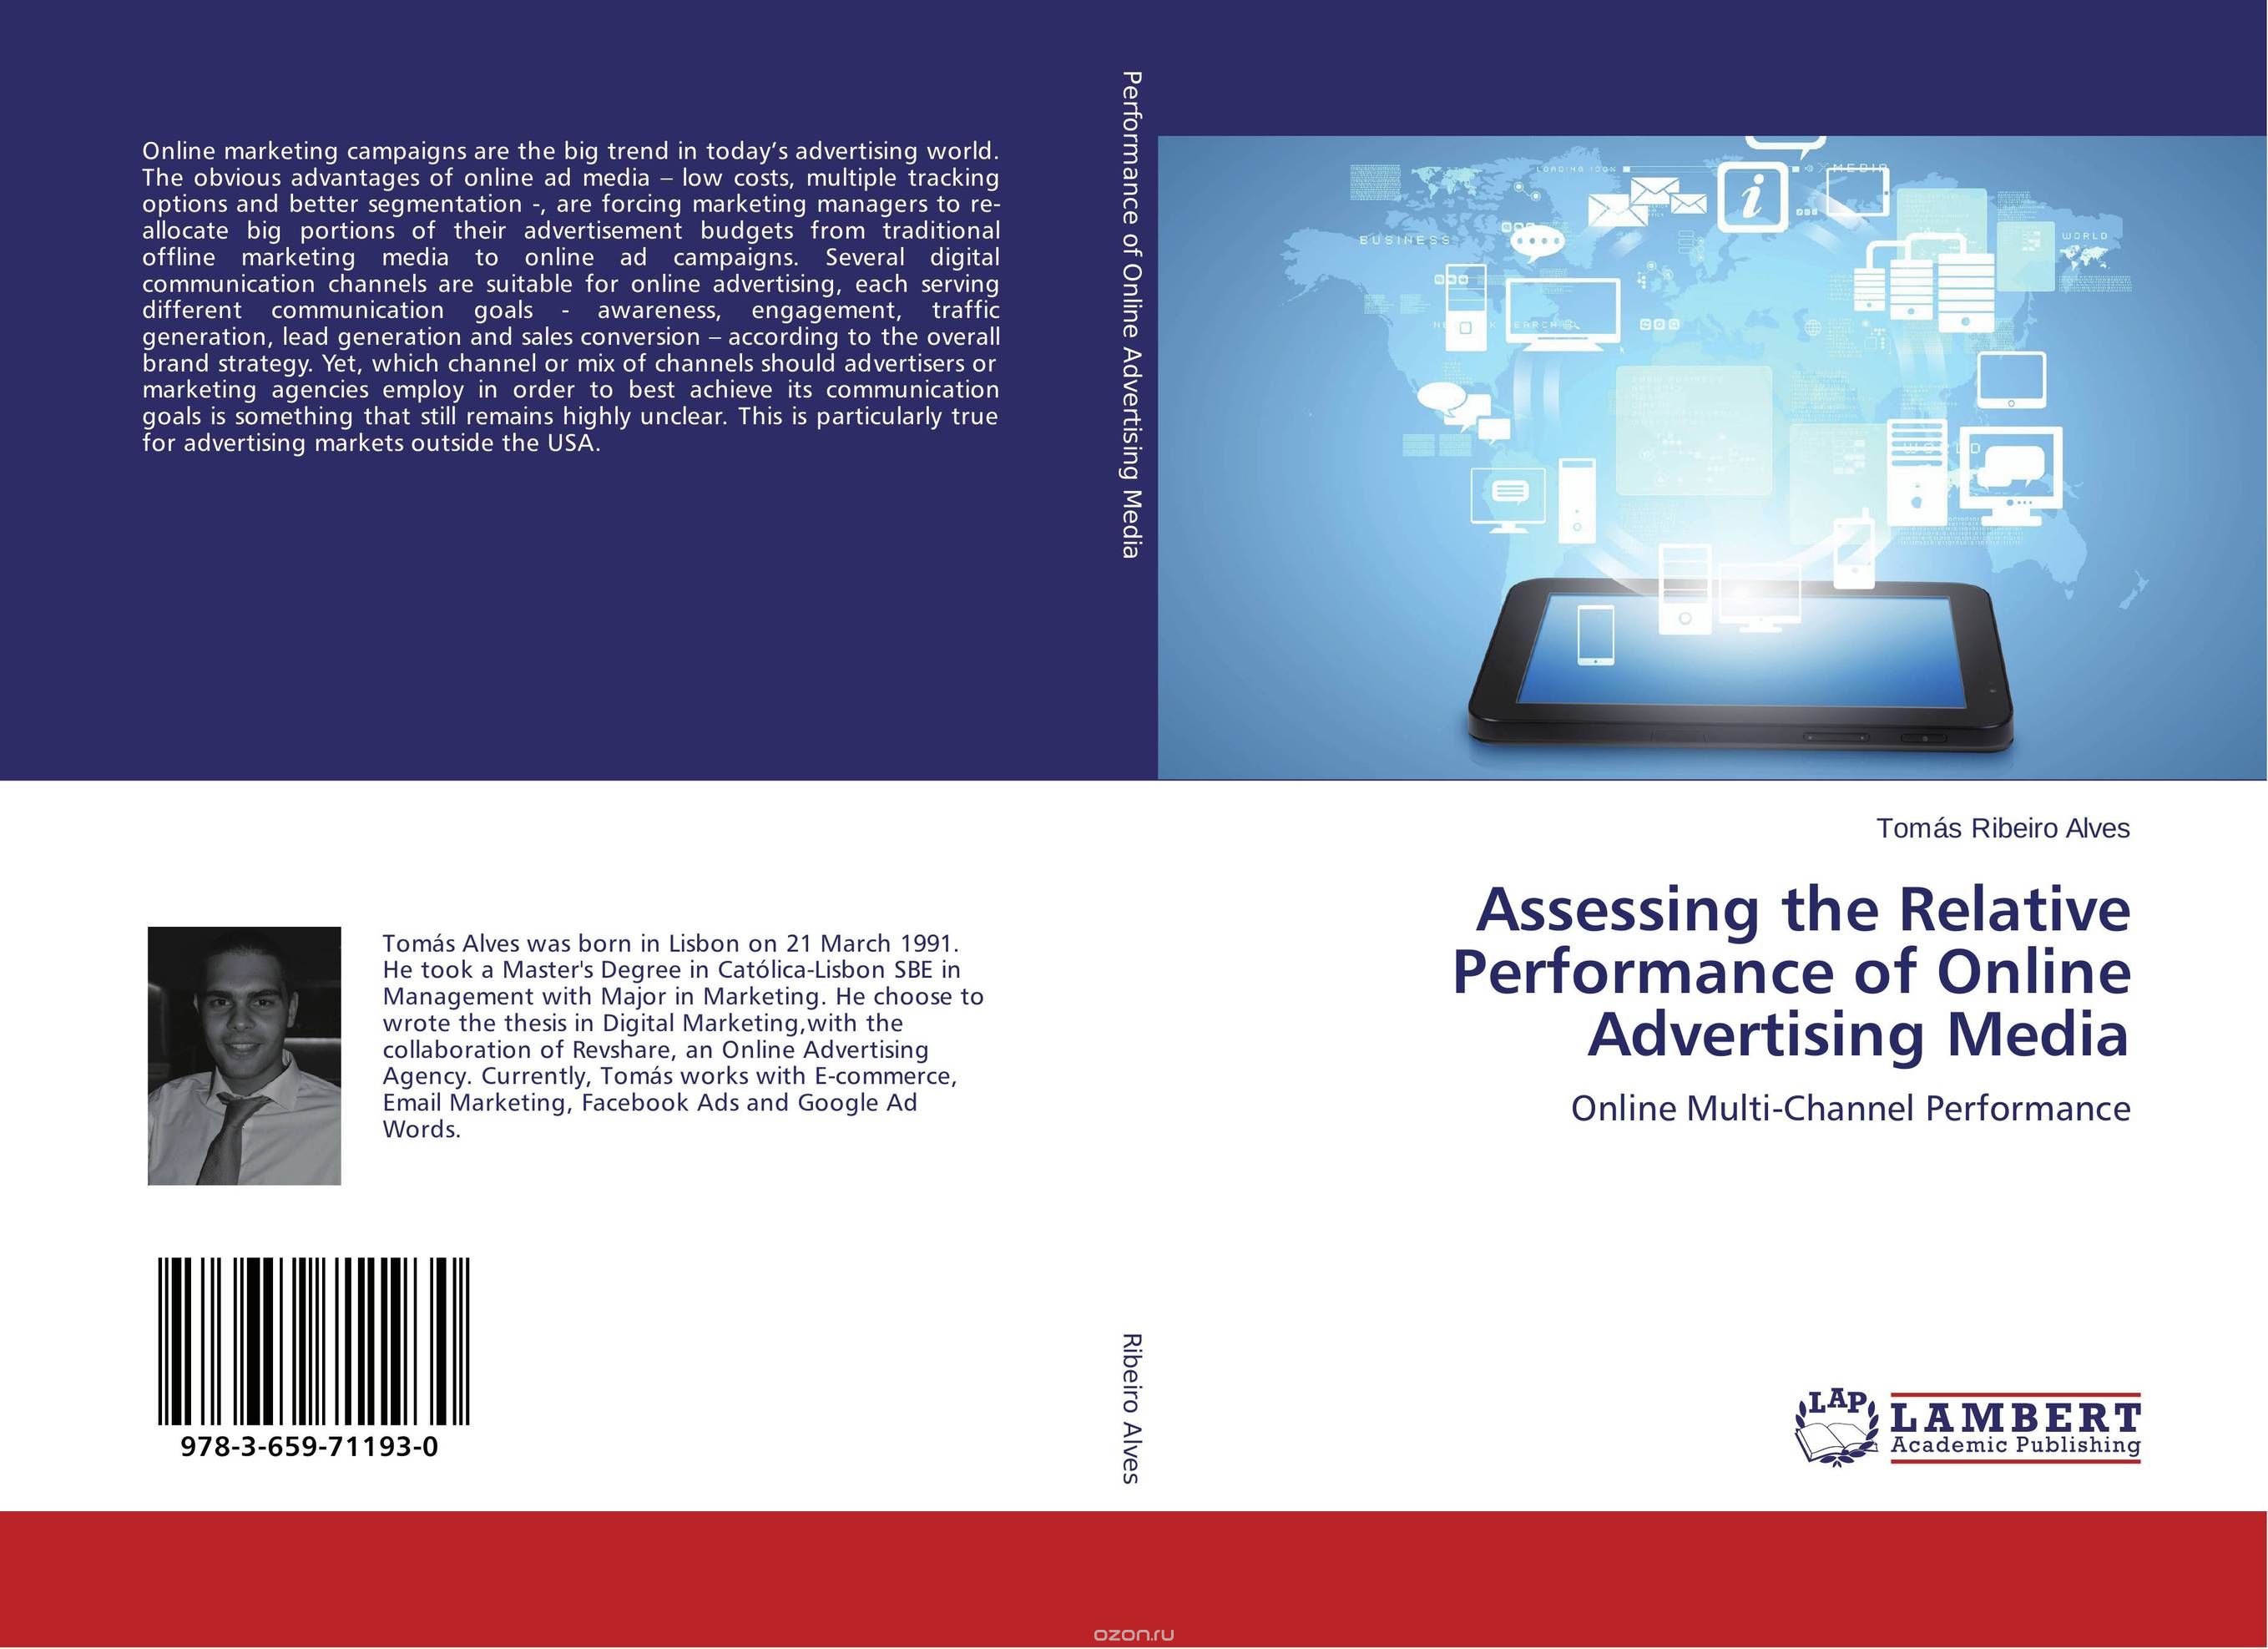 Скачать книгу "Assessing the Relative Performance of Online Advertising Media"